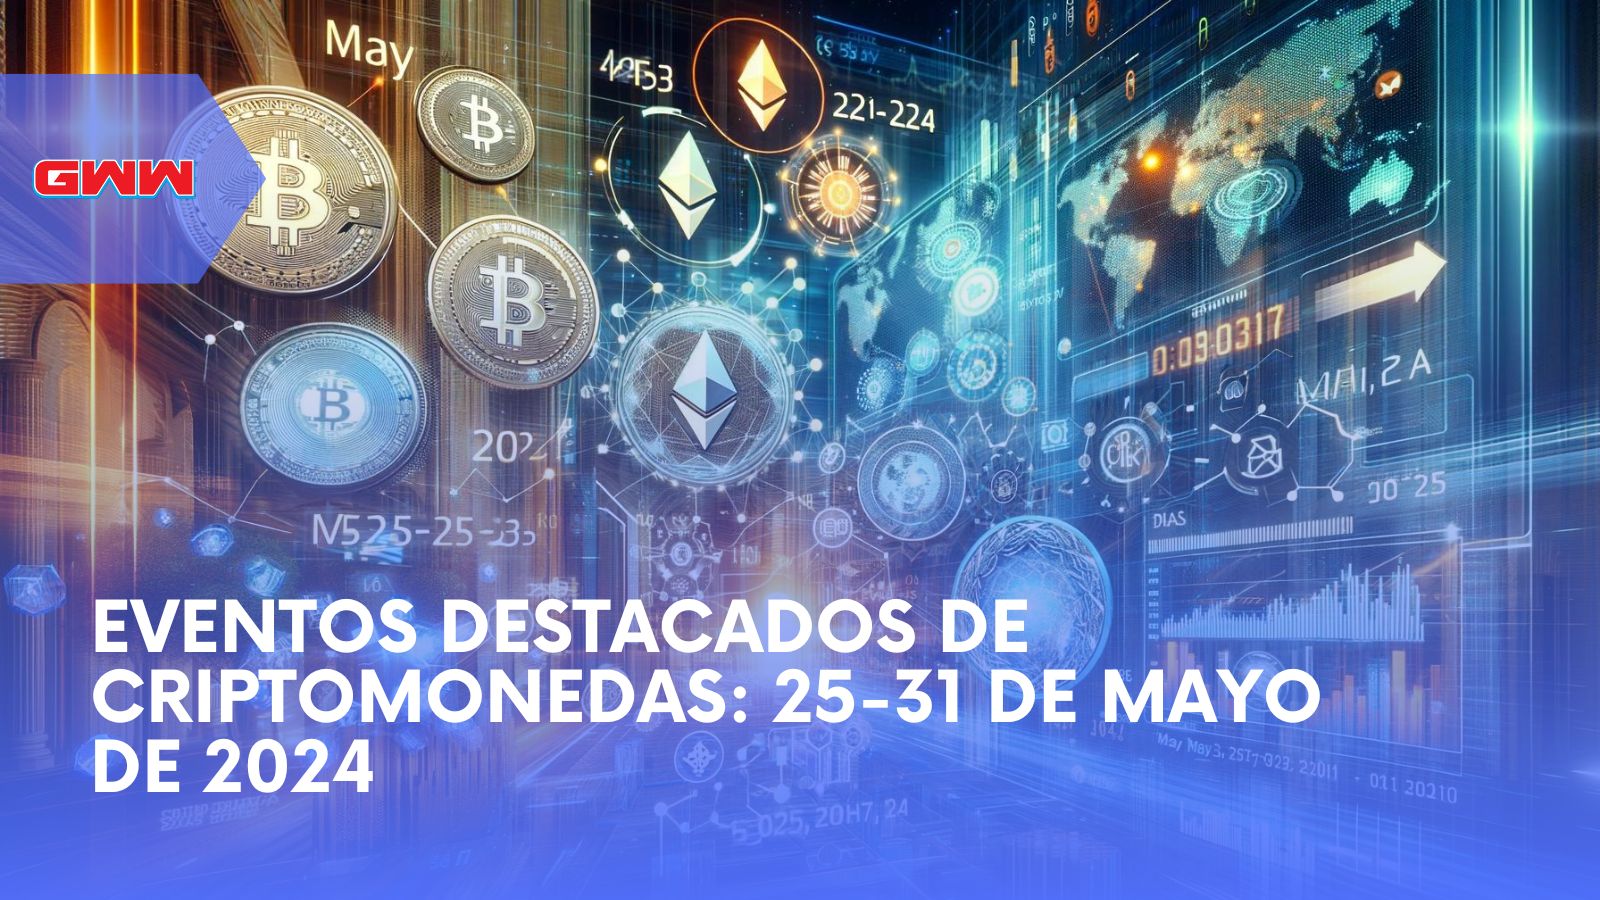 Eventos destacados de criptomonedas: 25-31 de mayo de 2024